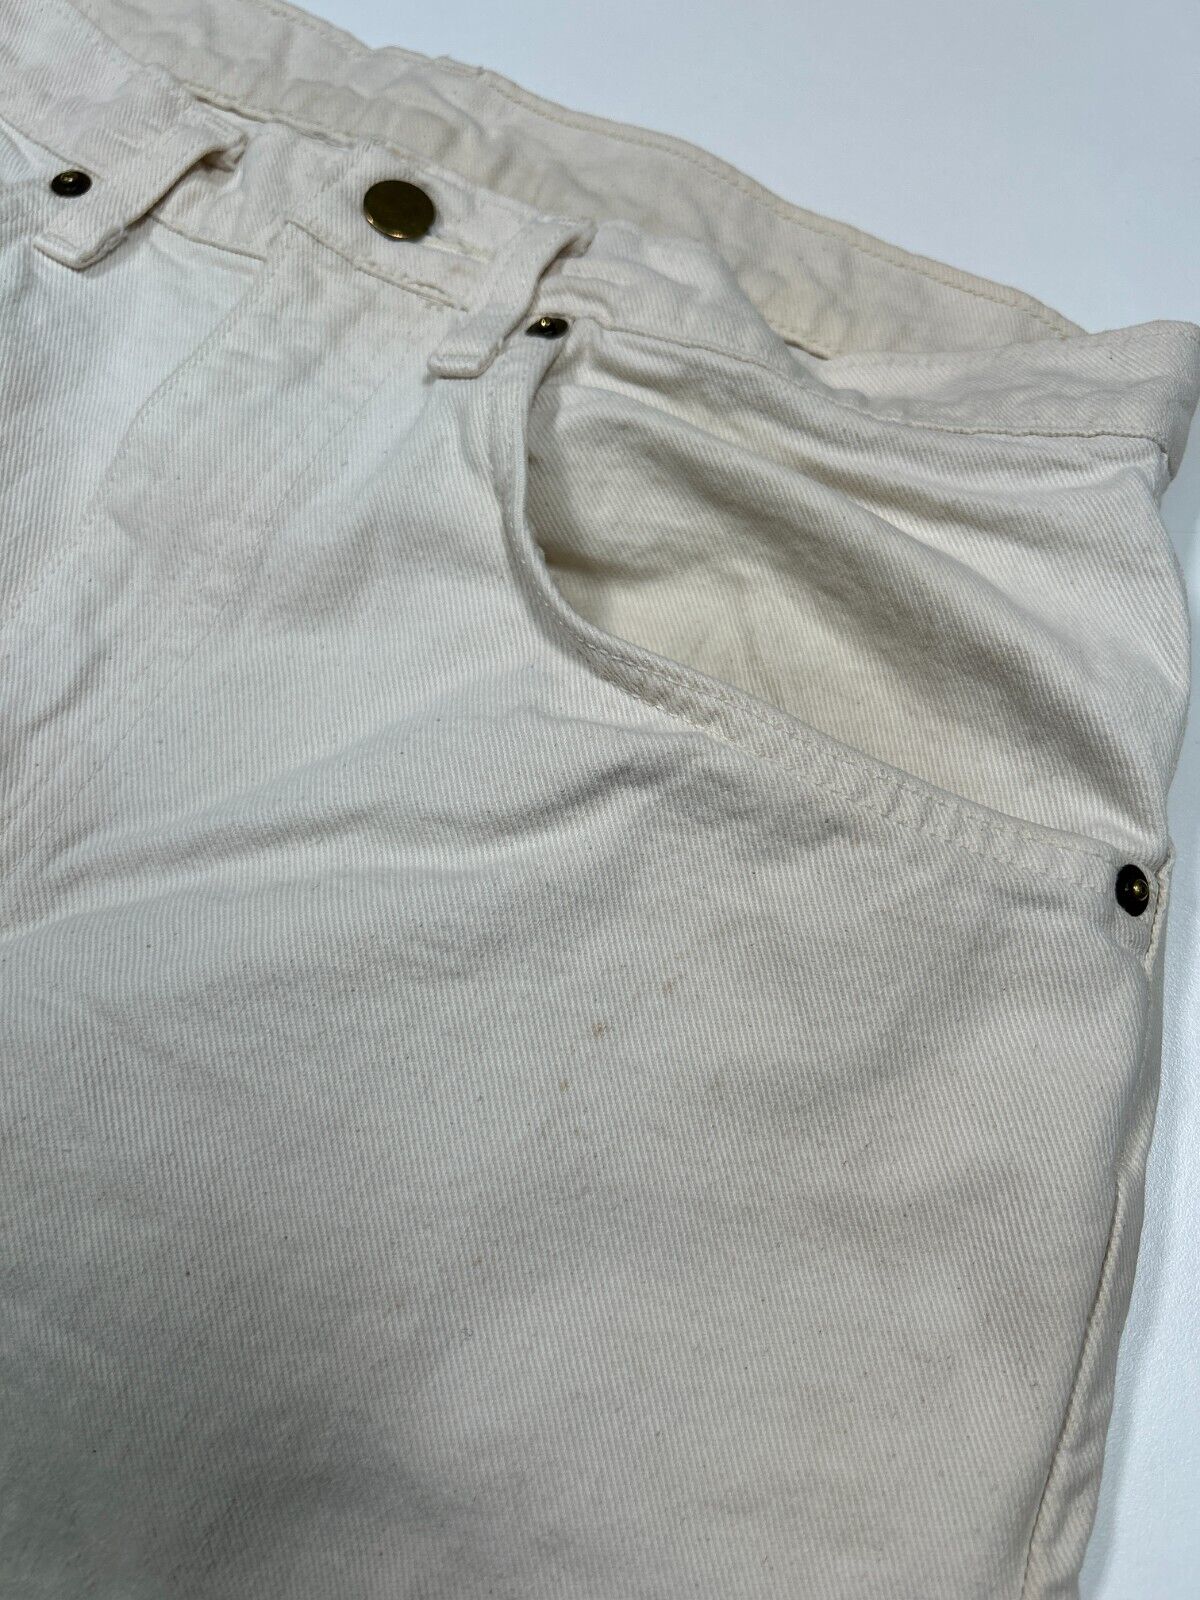 Vintage Bullseye Classic Jeans Wear Off White Cream Denim Shorts Size 31W